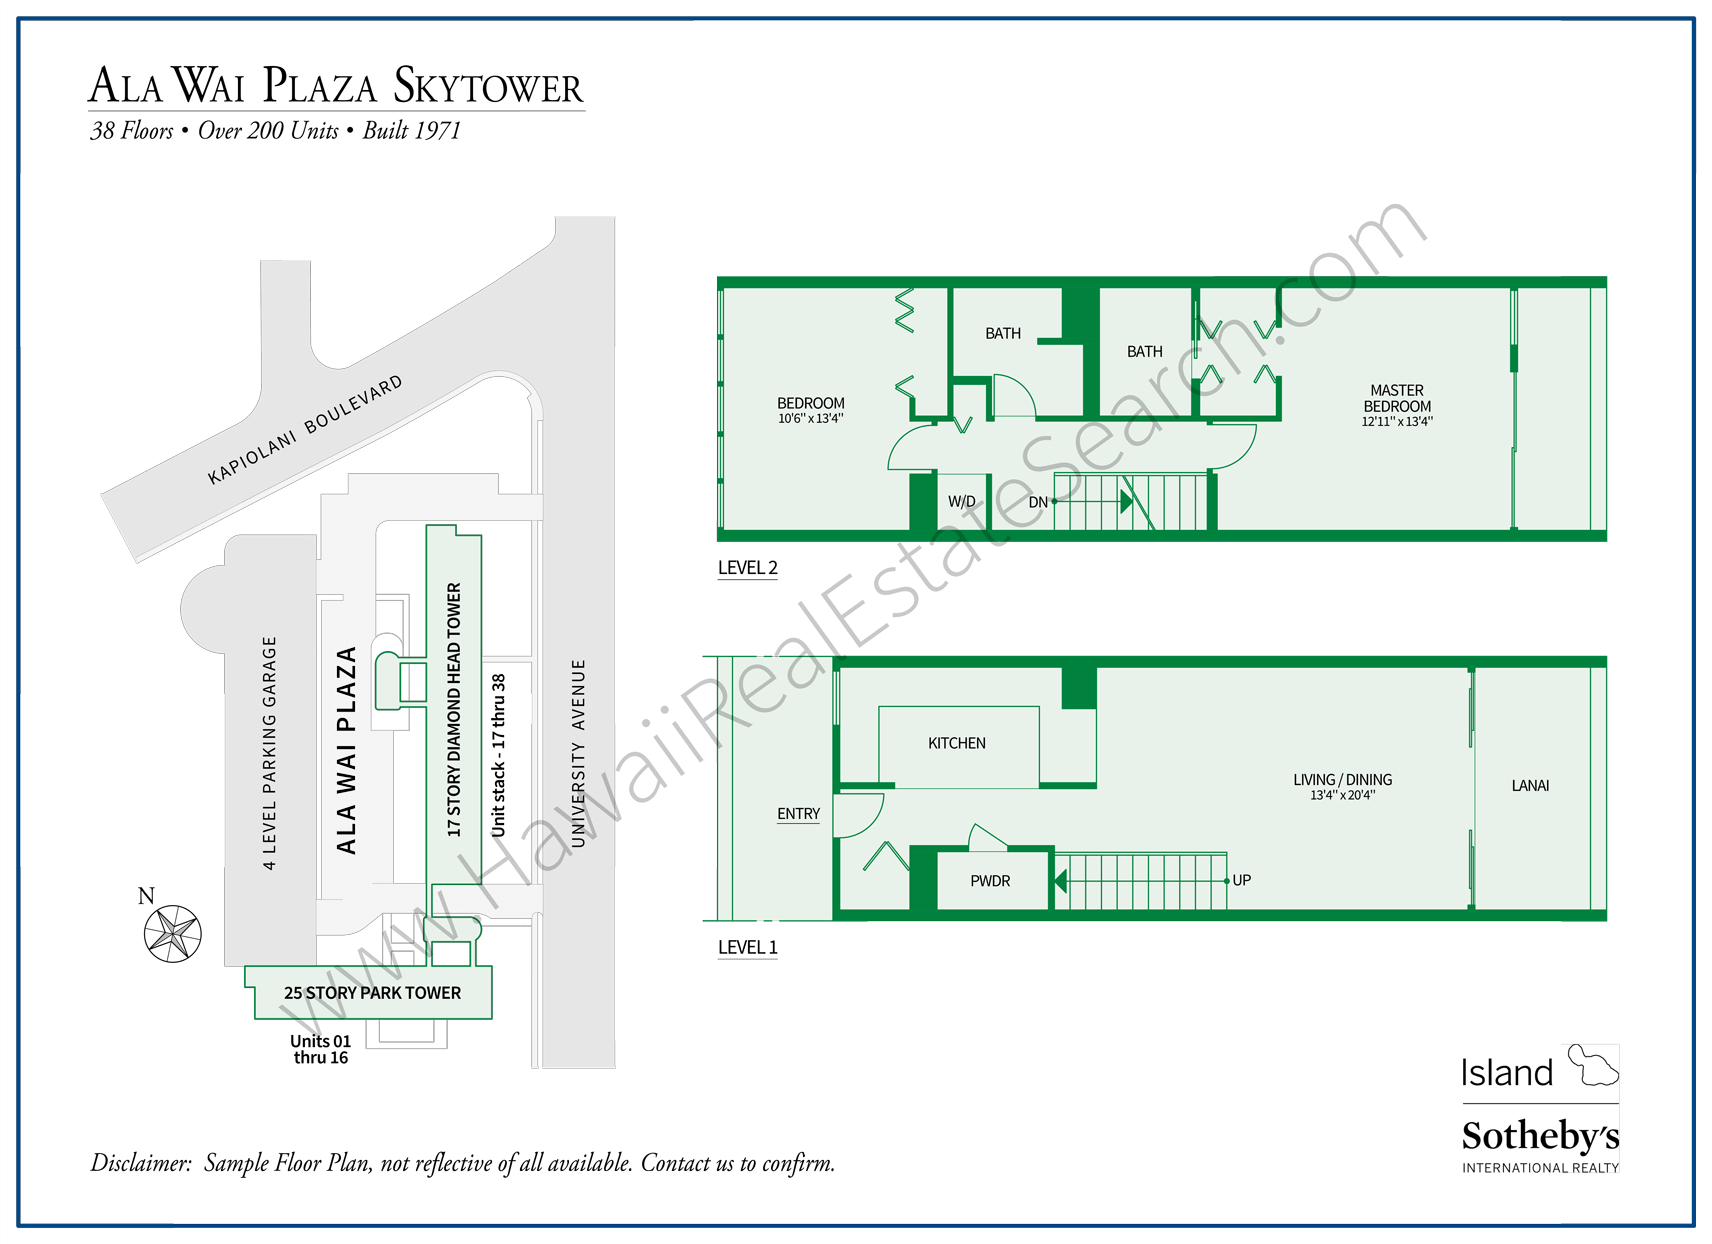 Map of Ala Wai Plaza Skyrise and Floor Plan